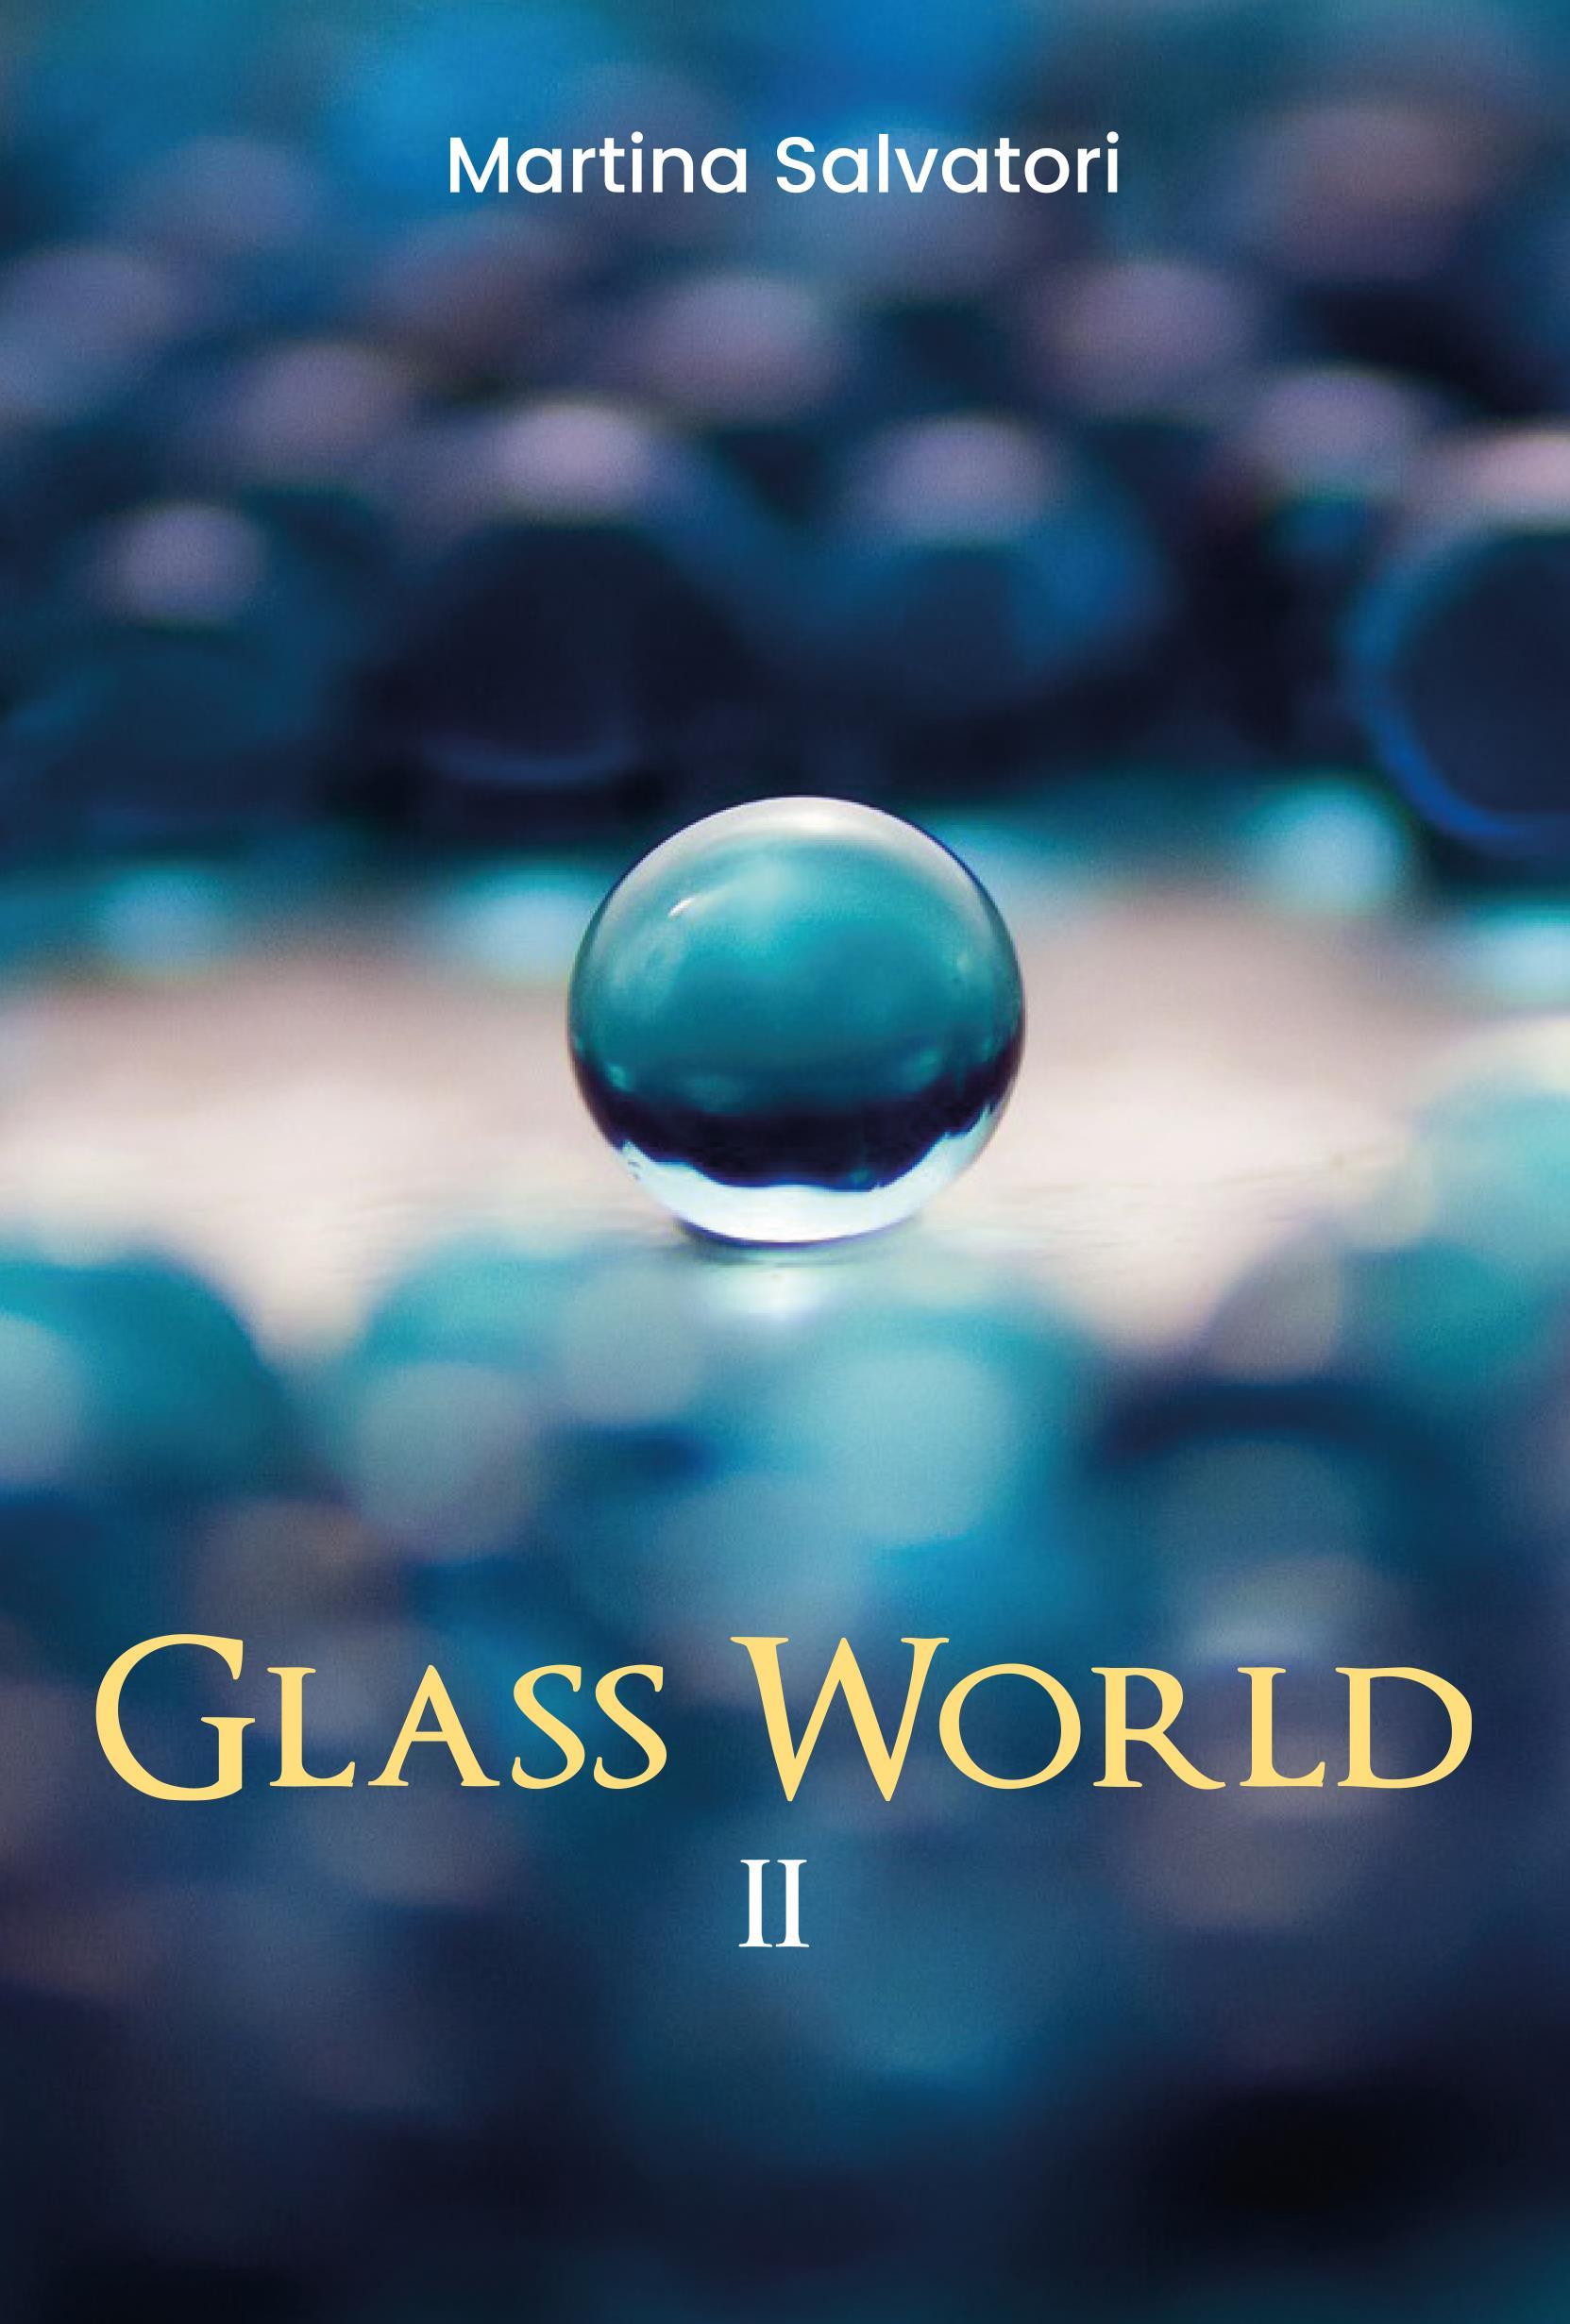 Glass world 2